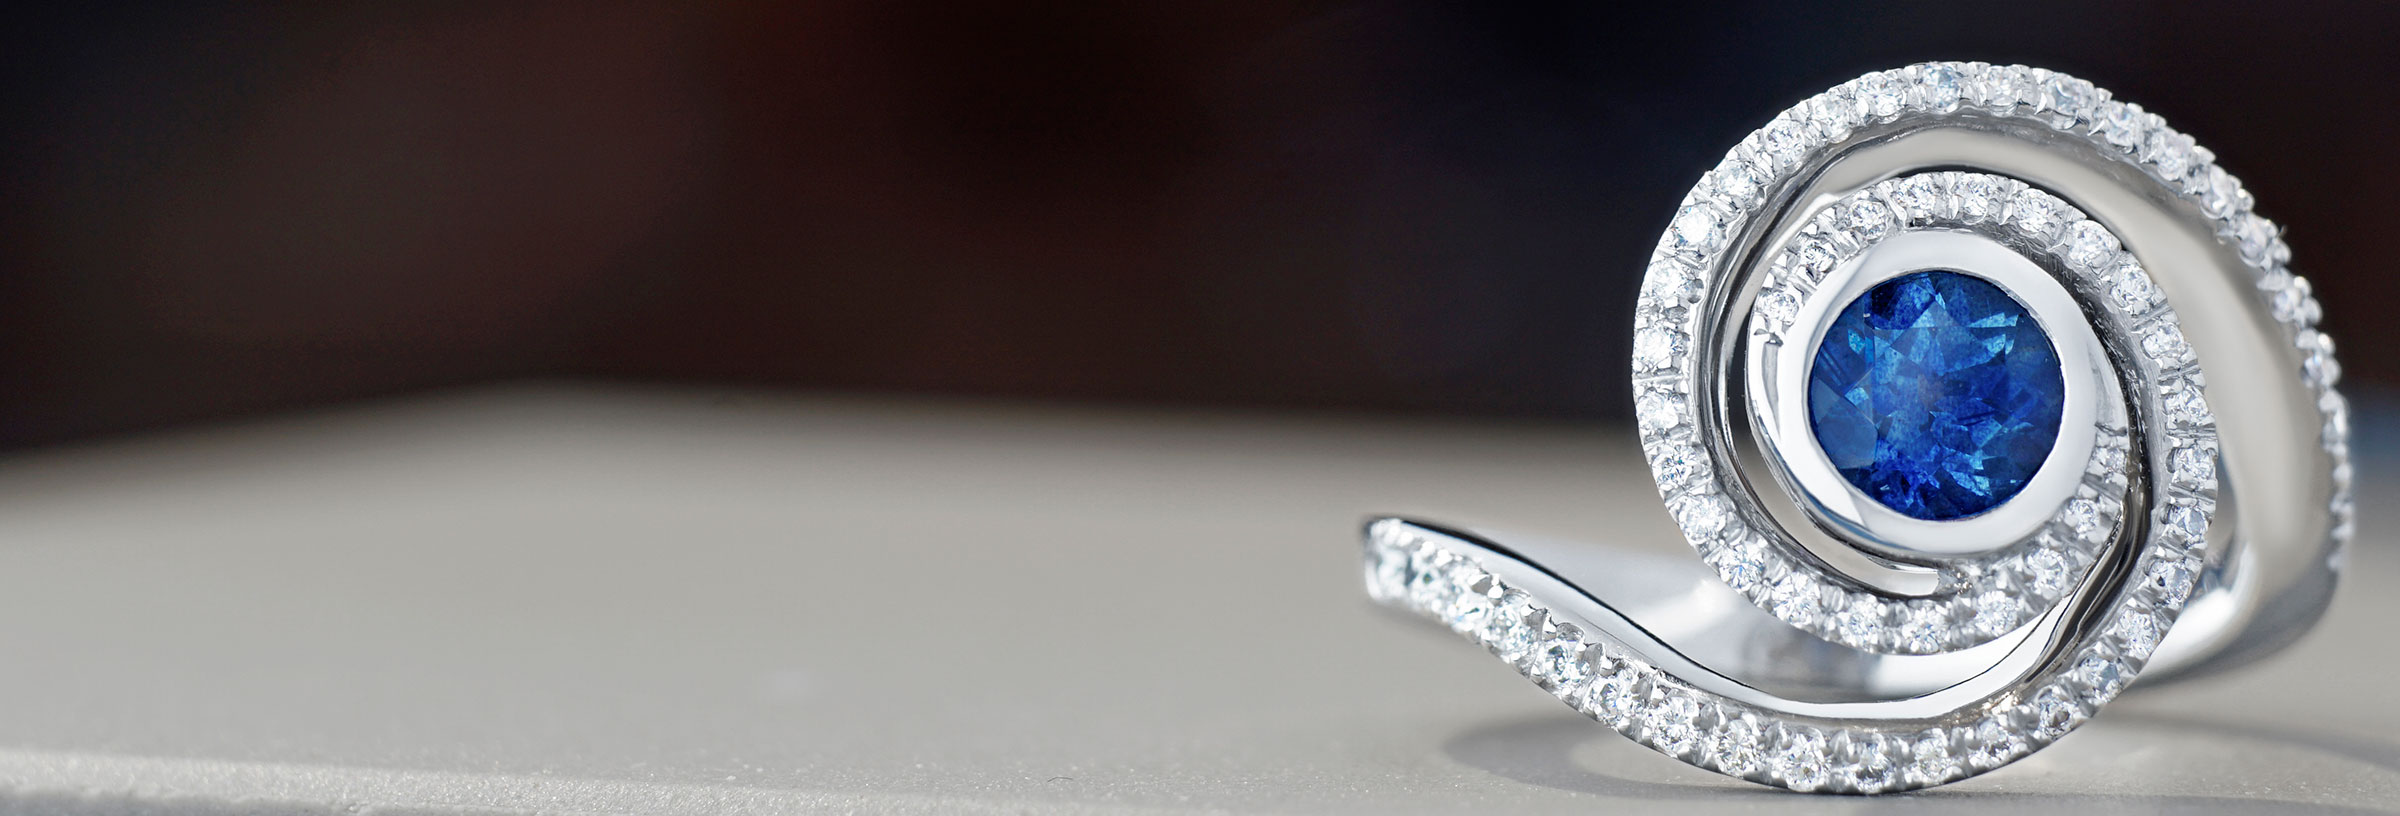 Milky way inspired platinum ring with sapphire diamonds